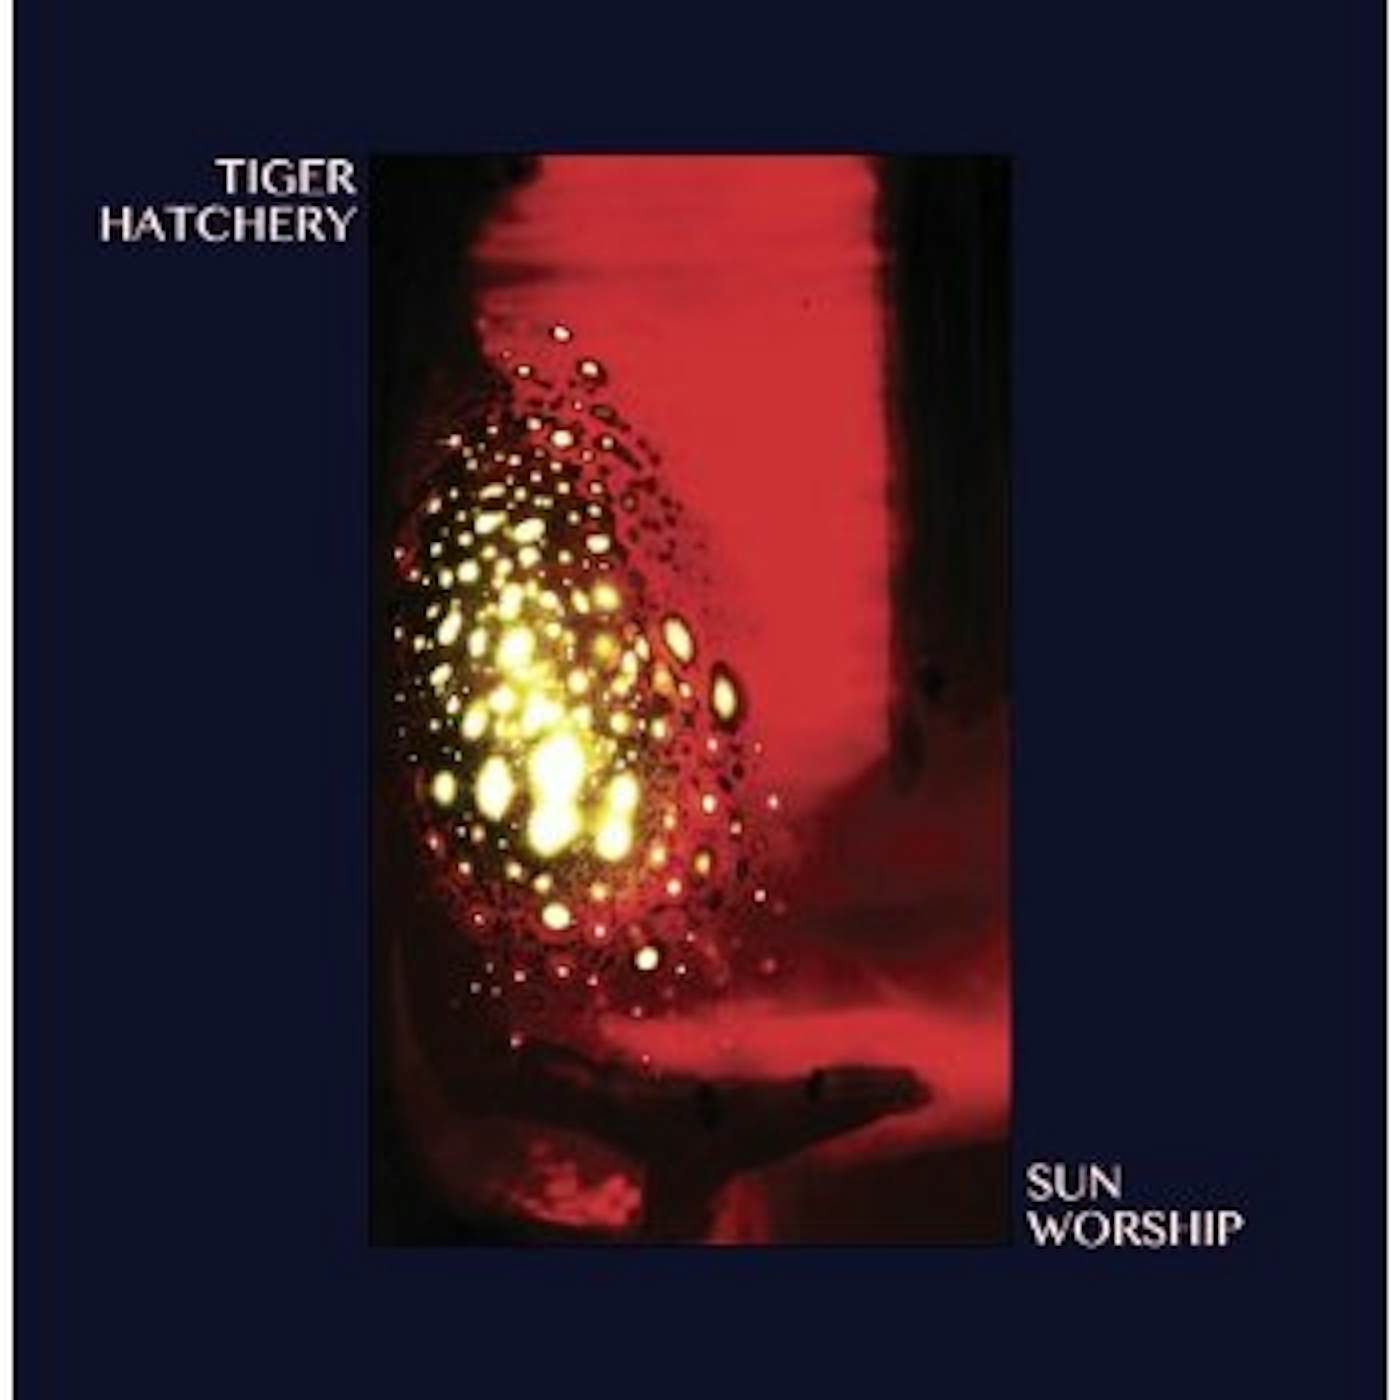 Tiger Hatchery Sun Worship Vinyl Record